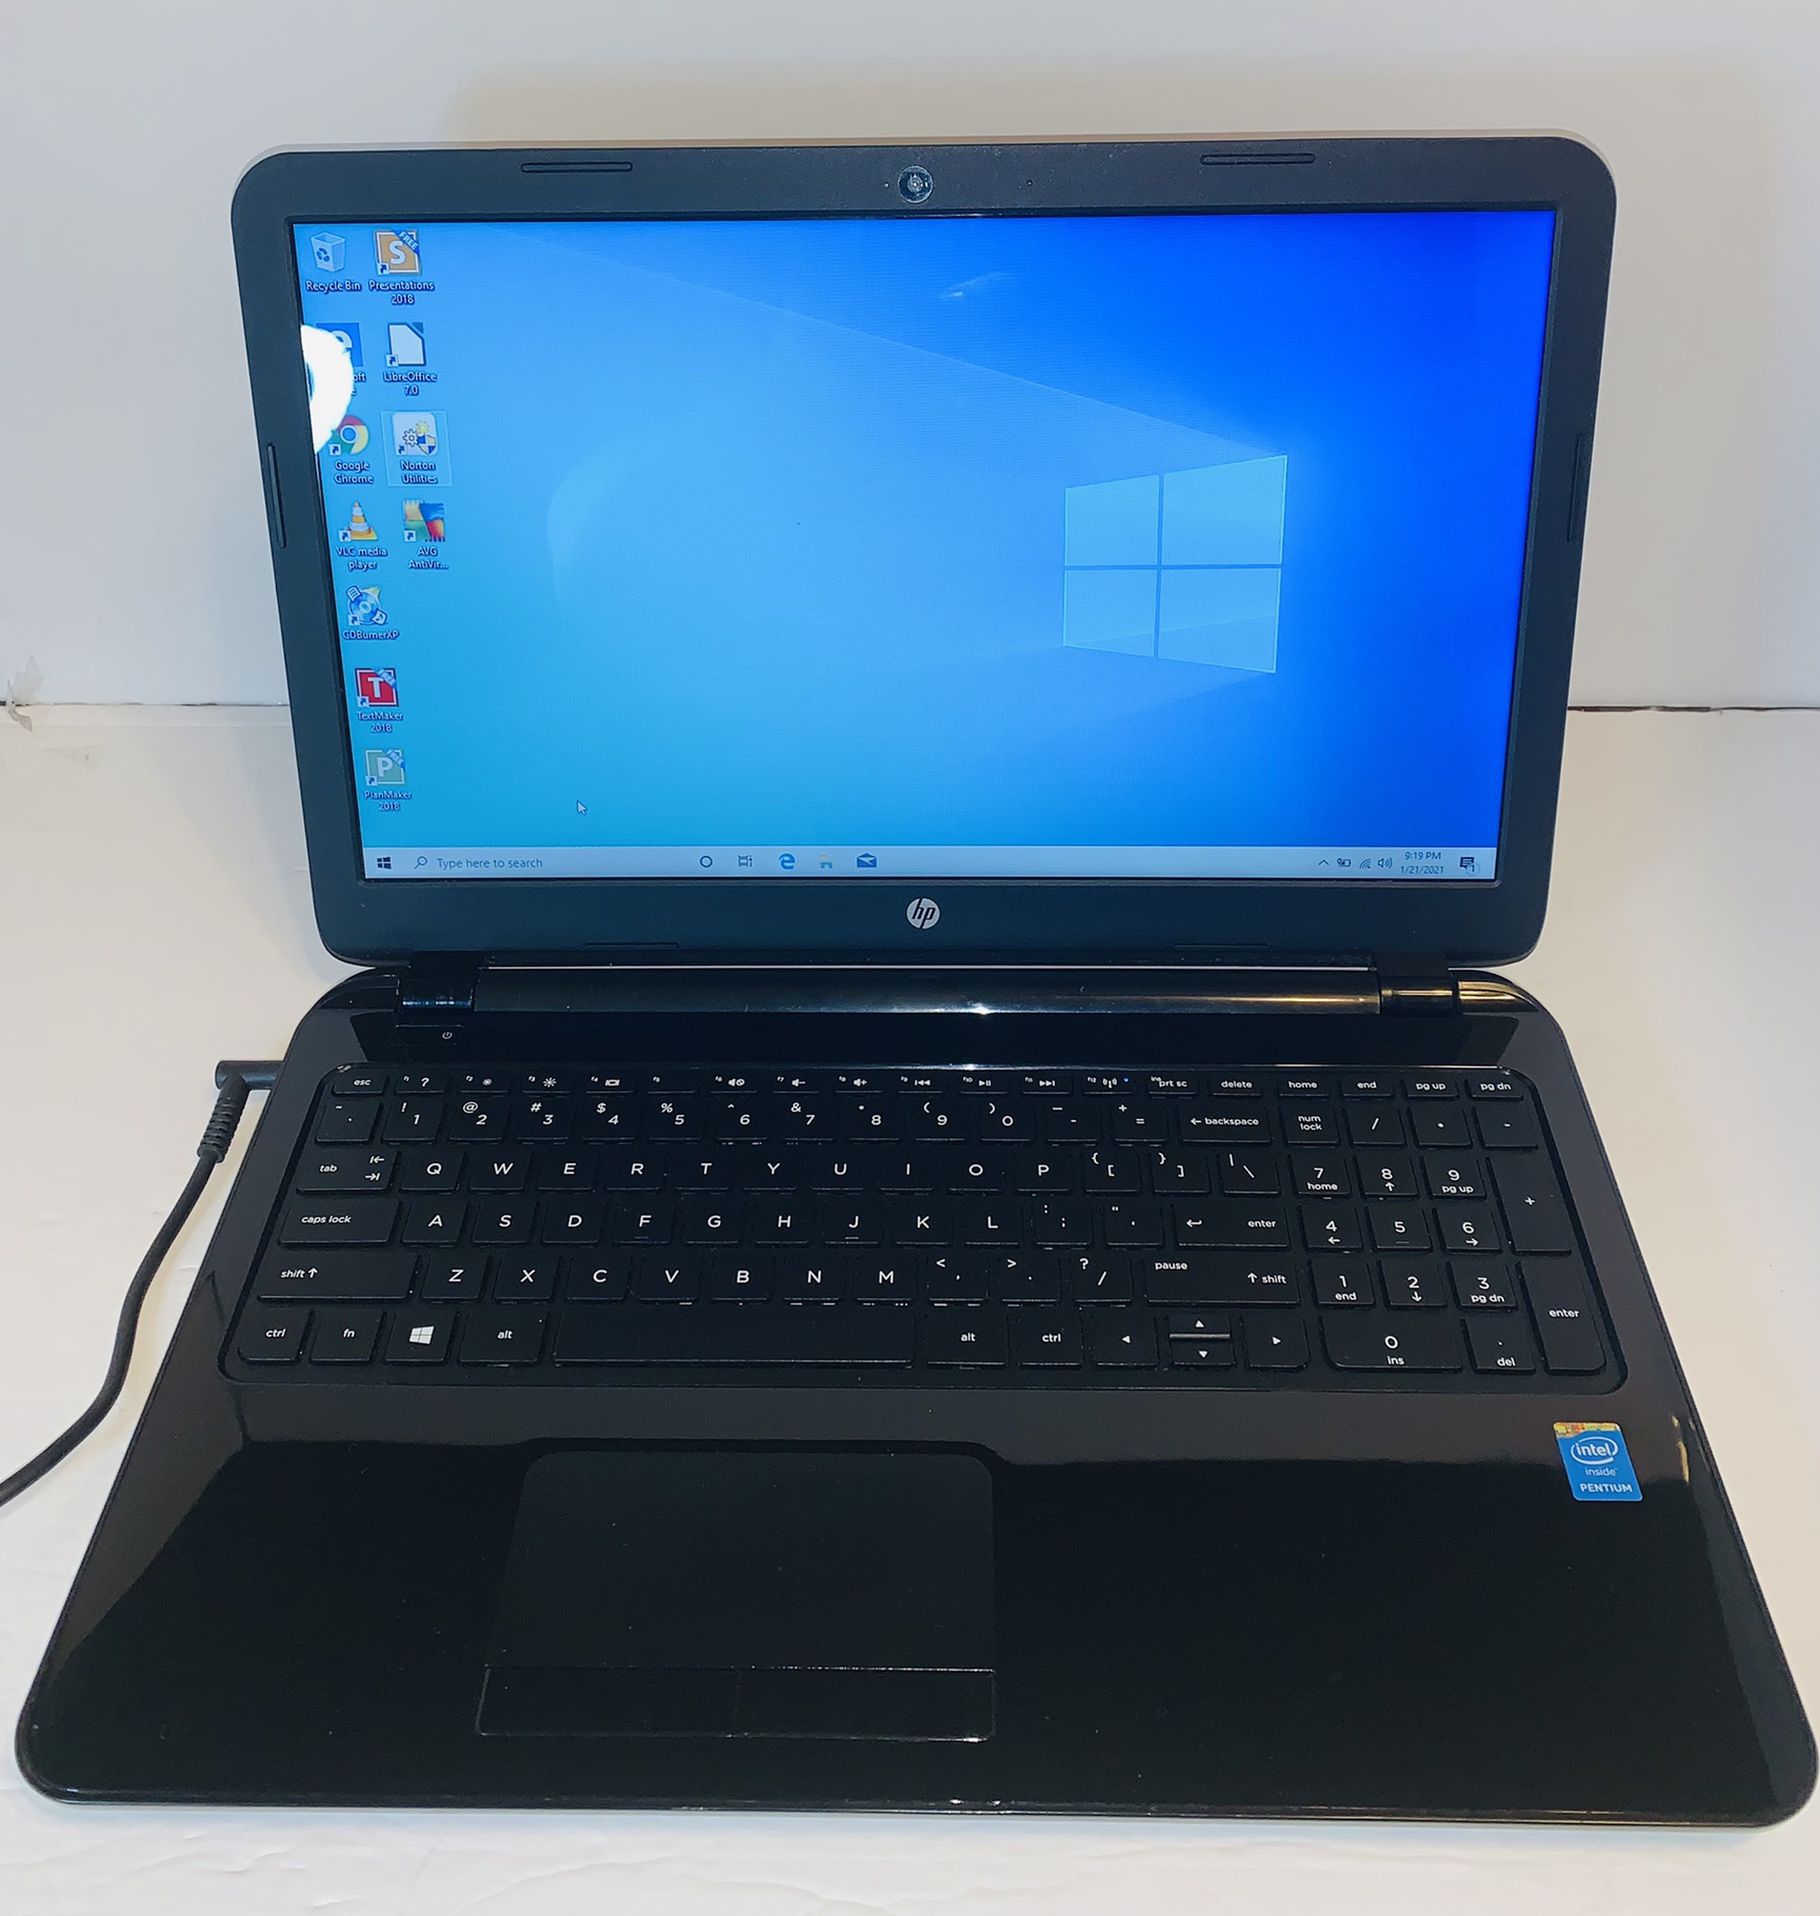 HP Notebook Model R011dx 15’inch Windows 10